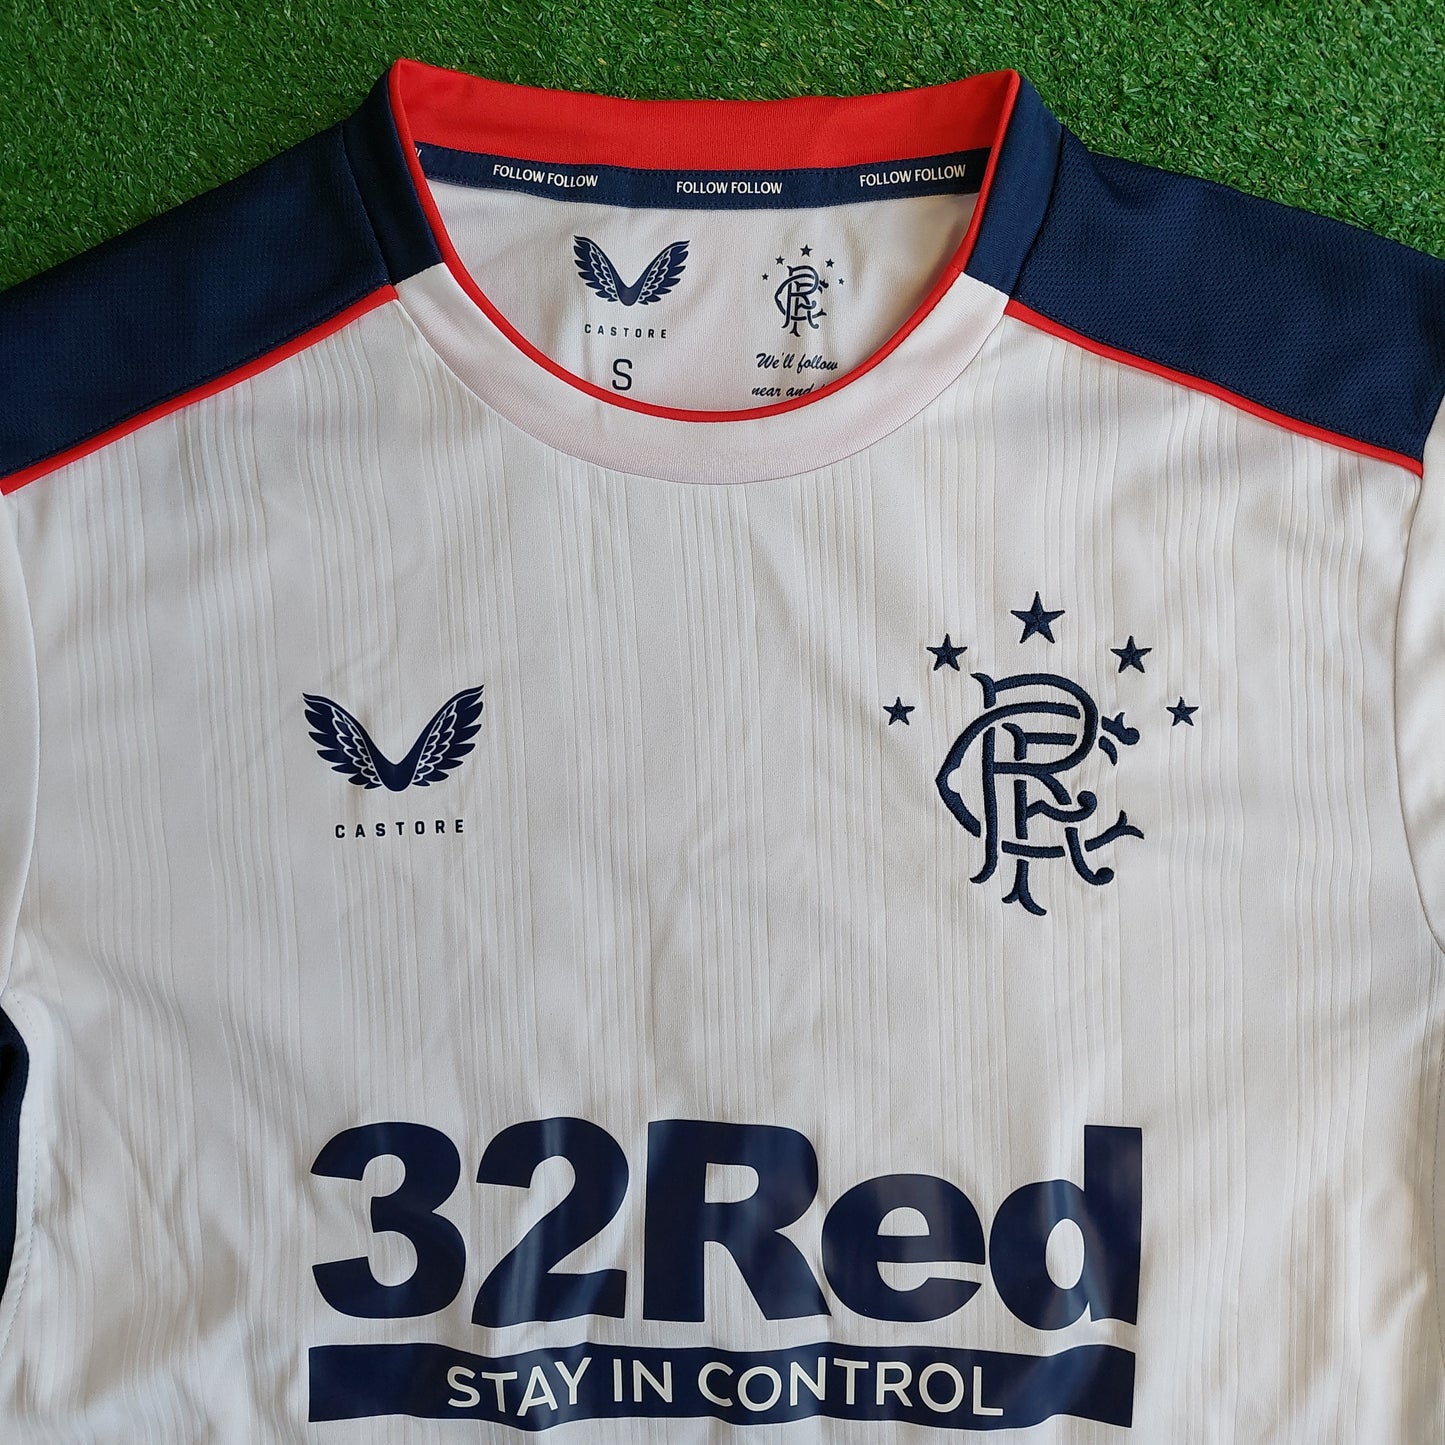 Rangers F.C. 2020/21 Away Shirt (Very good) - Size S